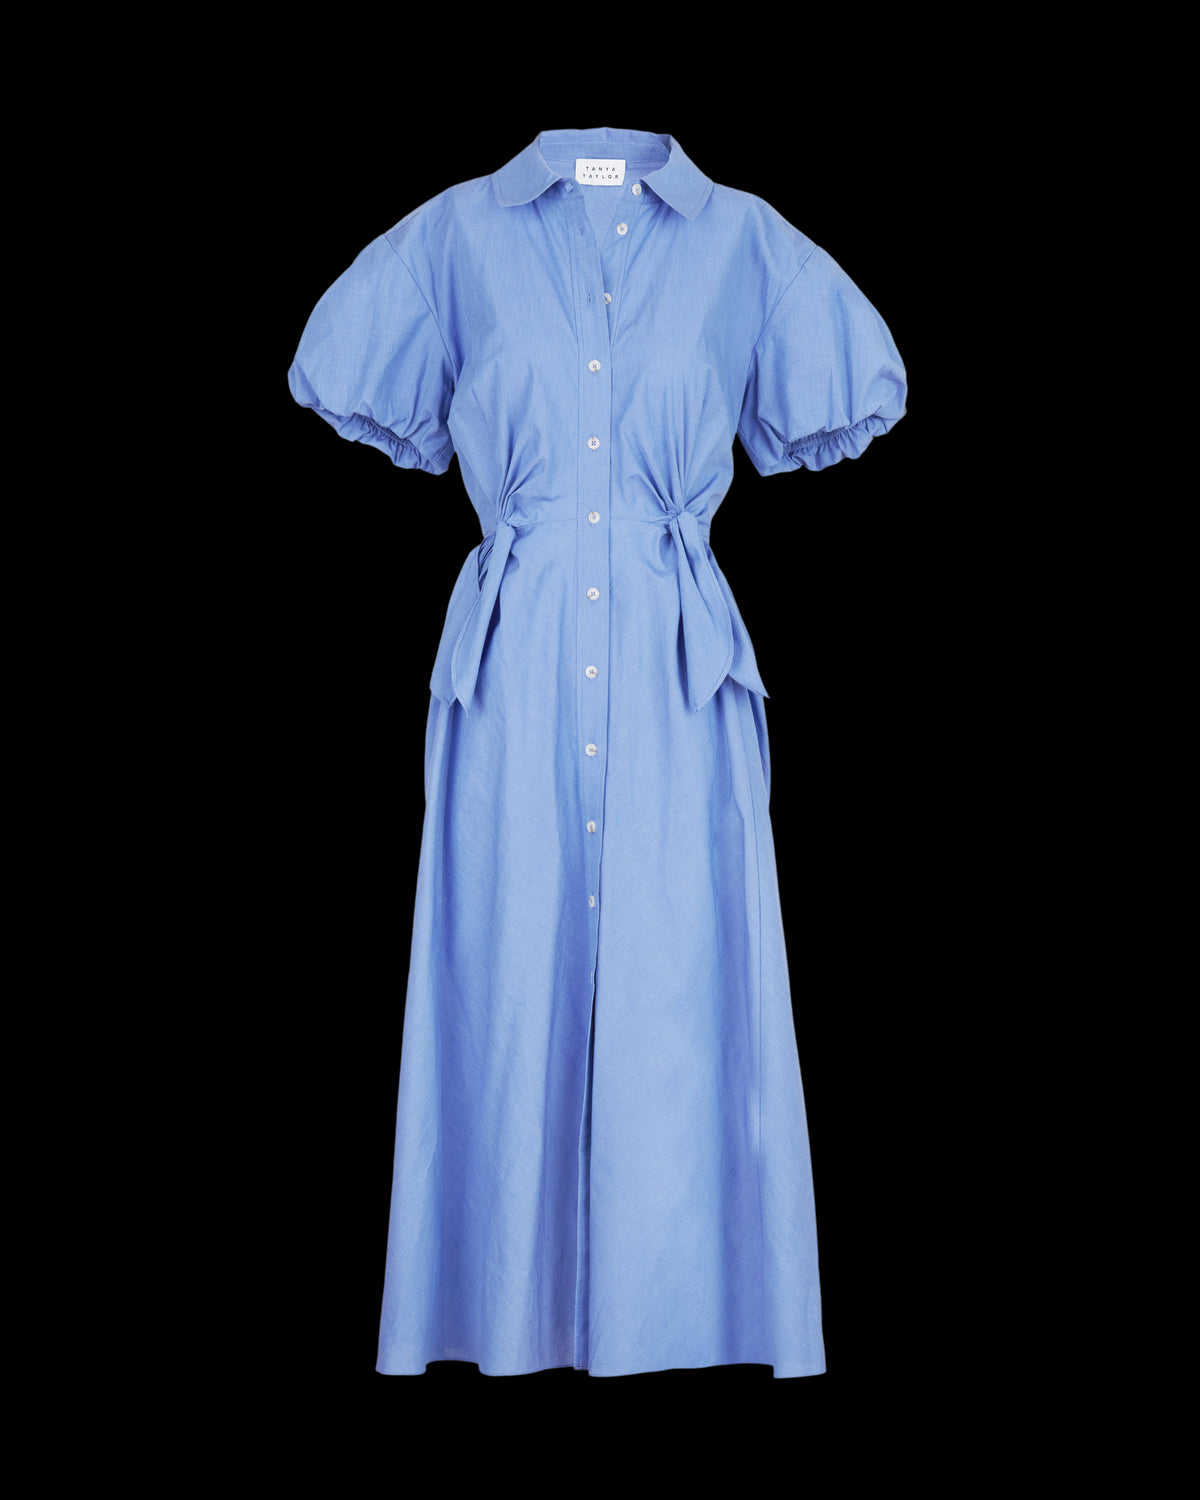 Elza Dress In Medium Oxford Blue